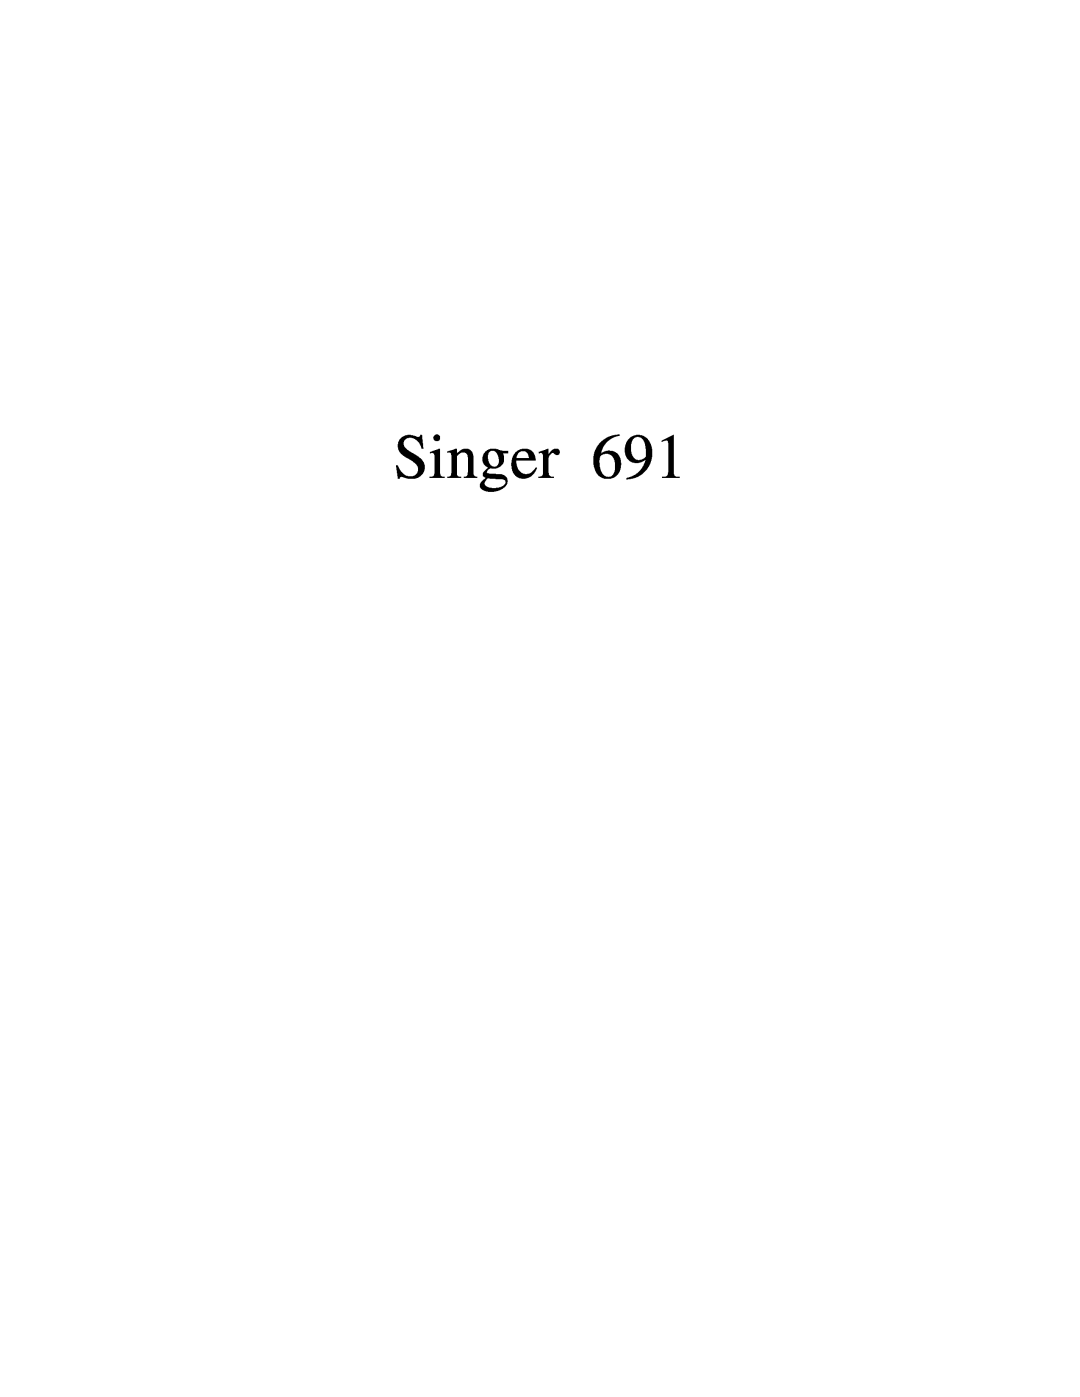 Singer 691 manual Singer 